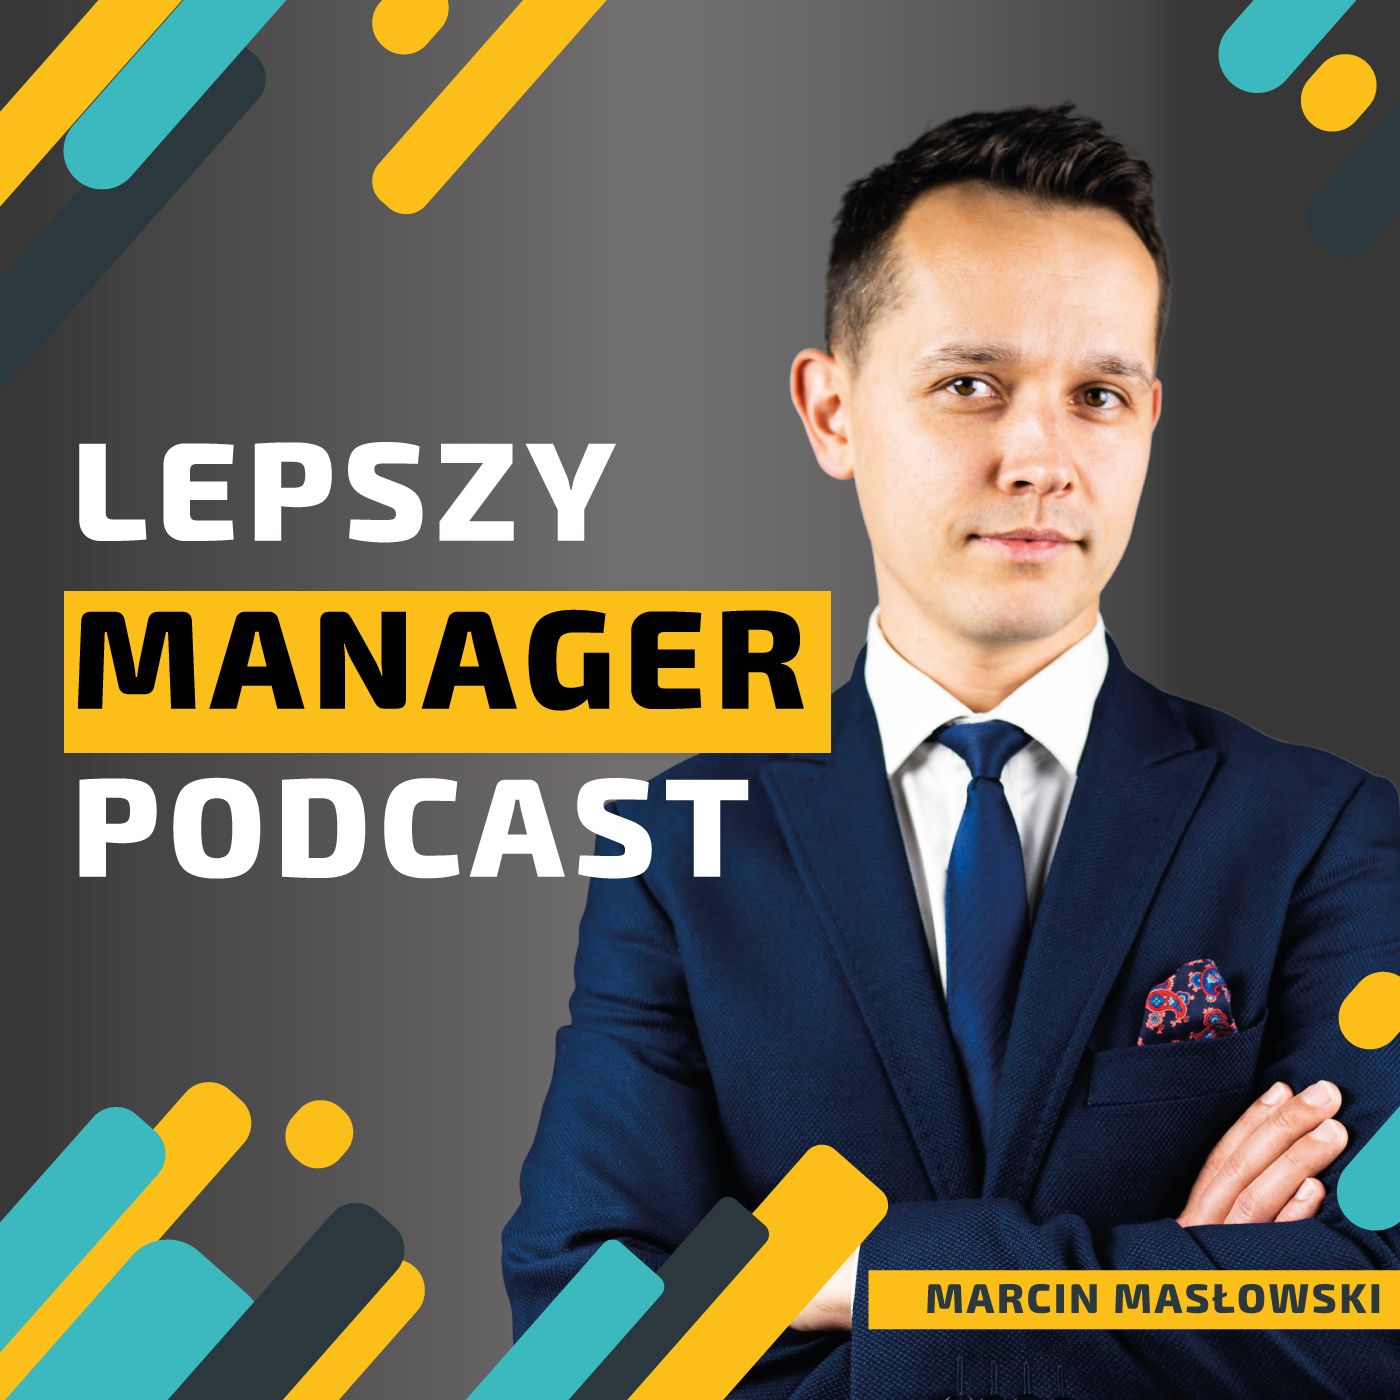 Lepszy Manager Podcast